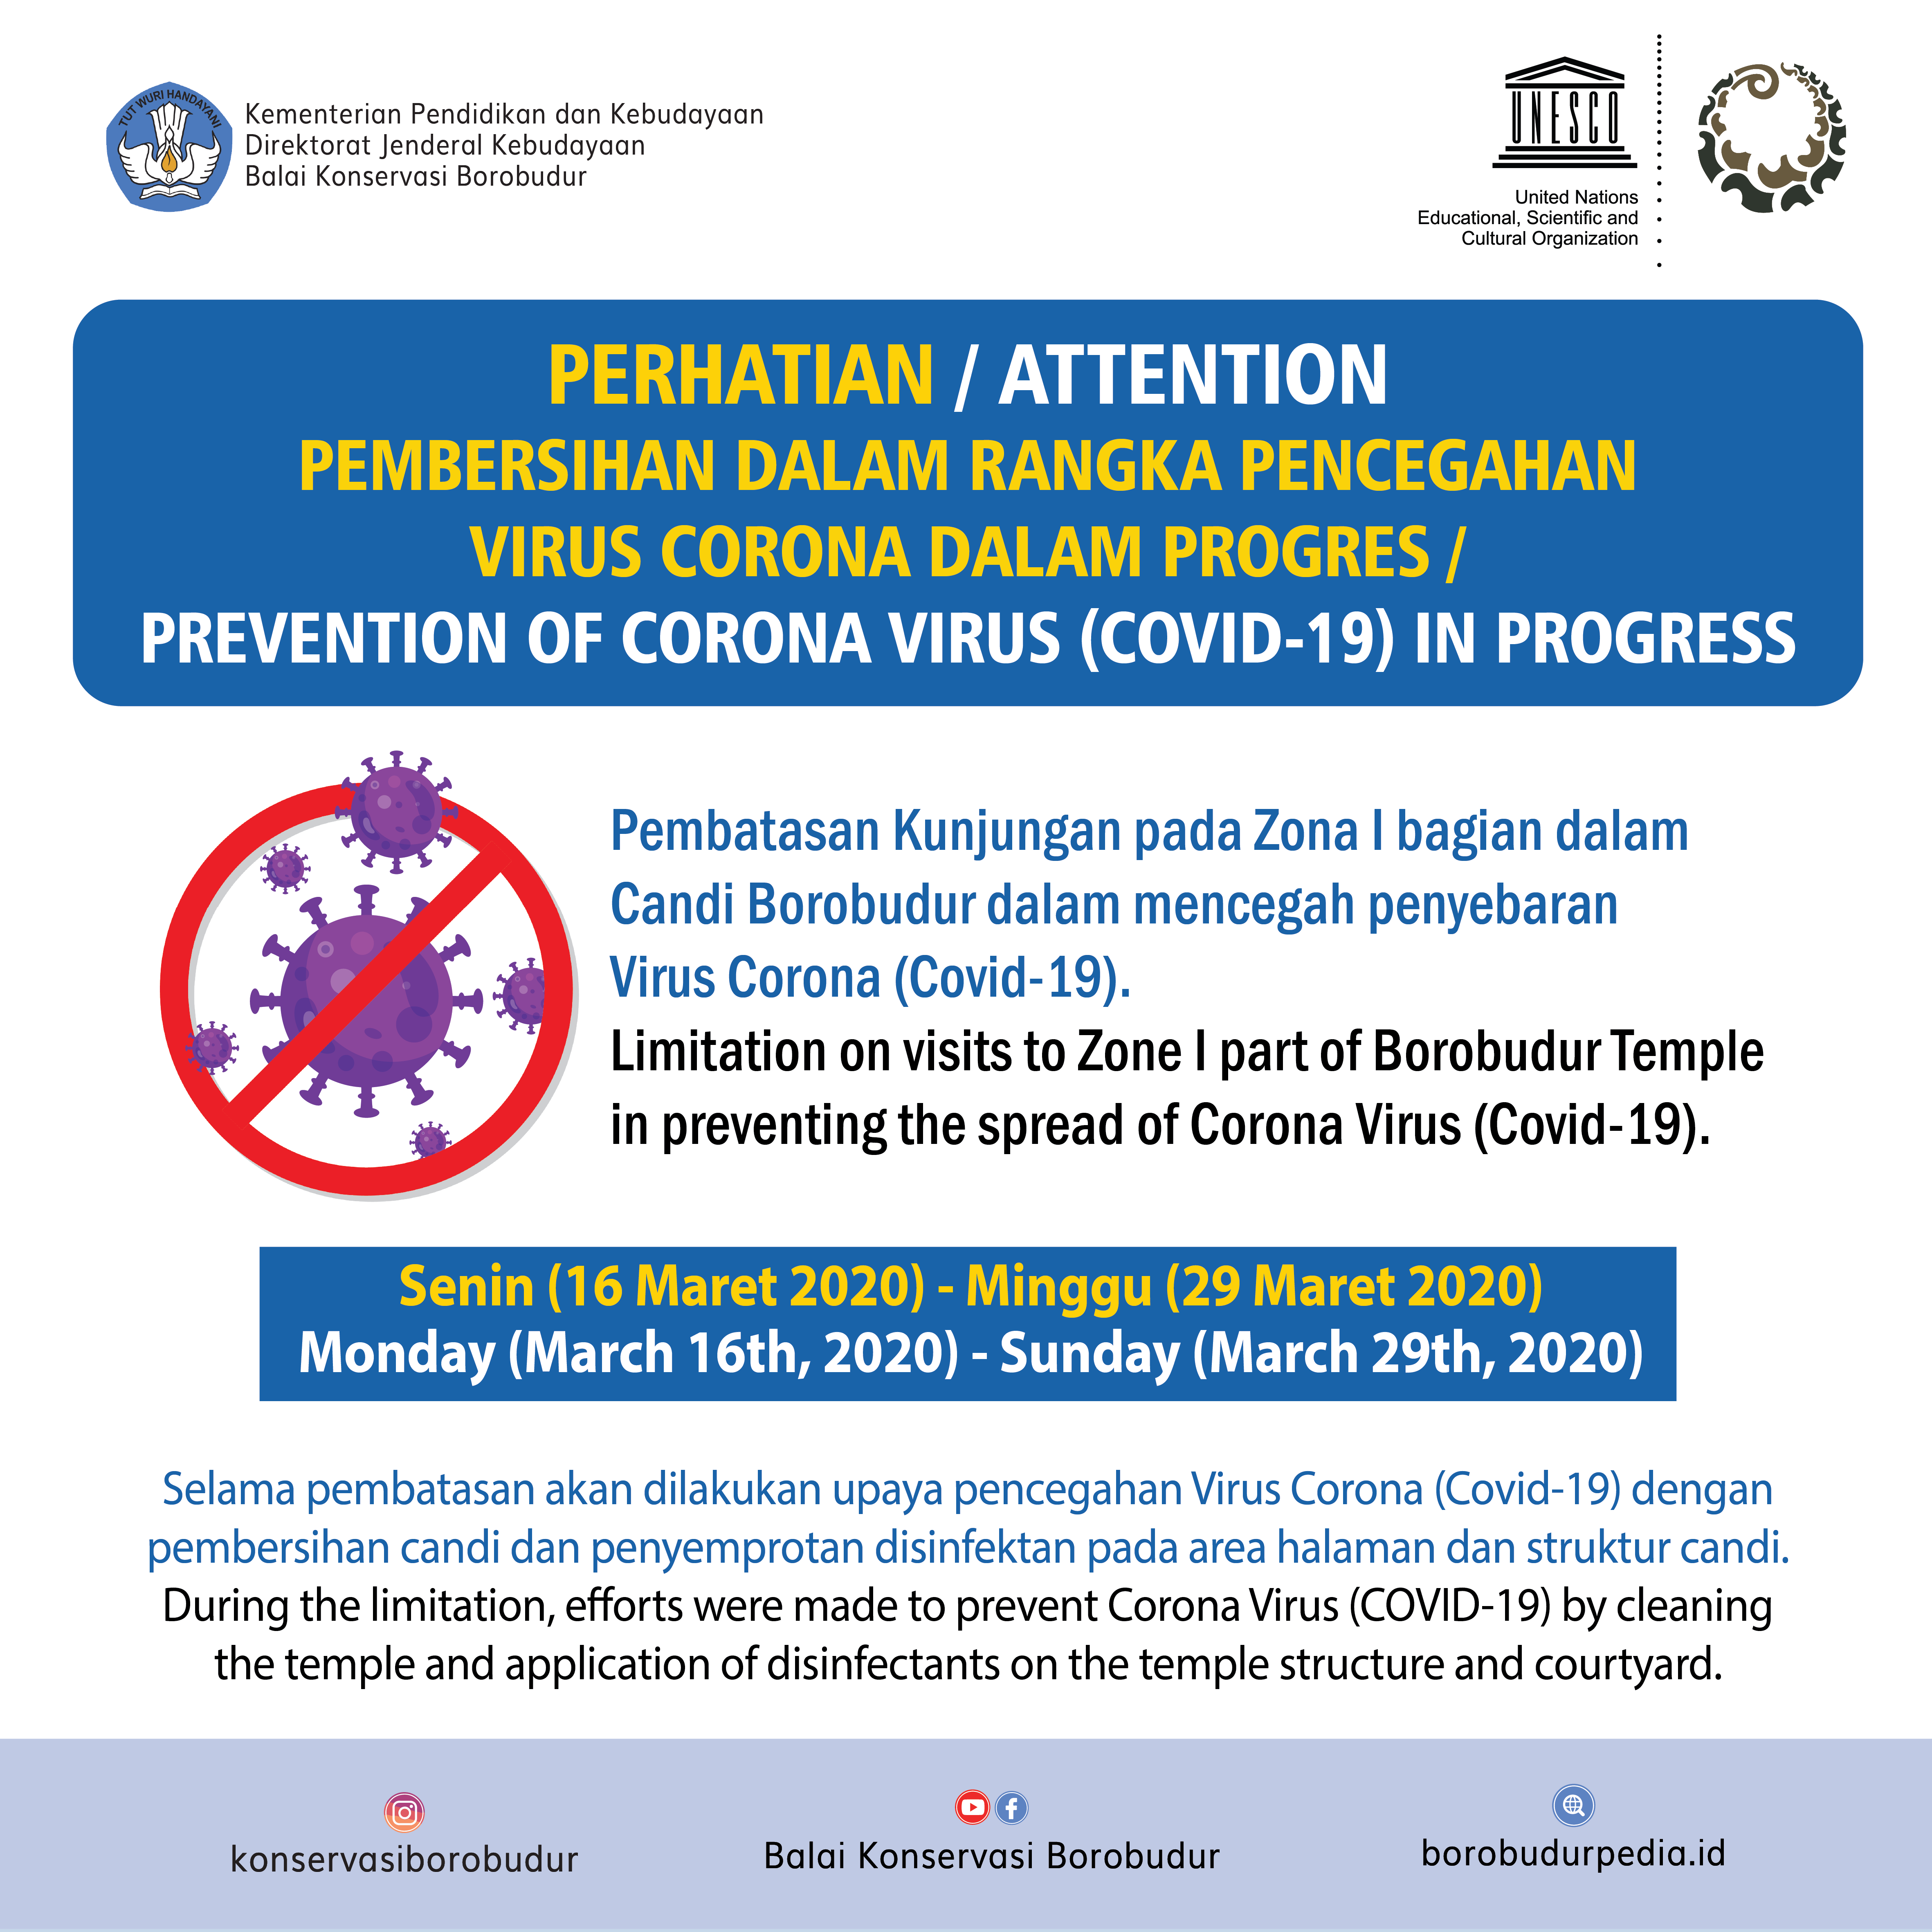 You are currently viewing Pembersihan Dalam Rangka Pencegahan Virus Corona dalam Progres